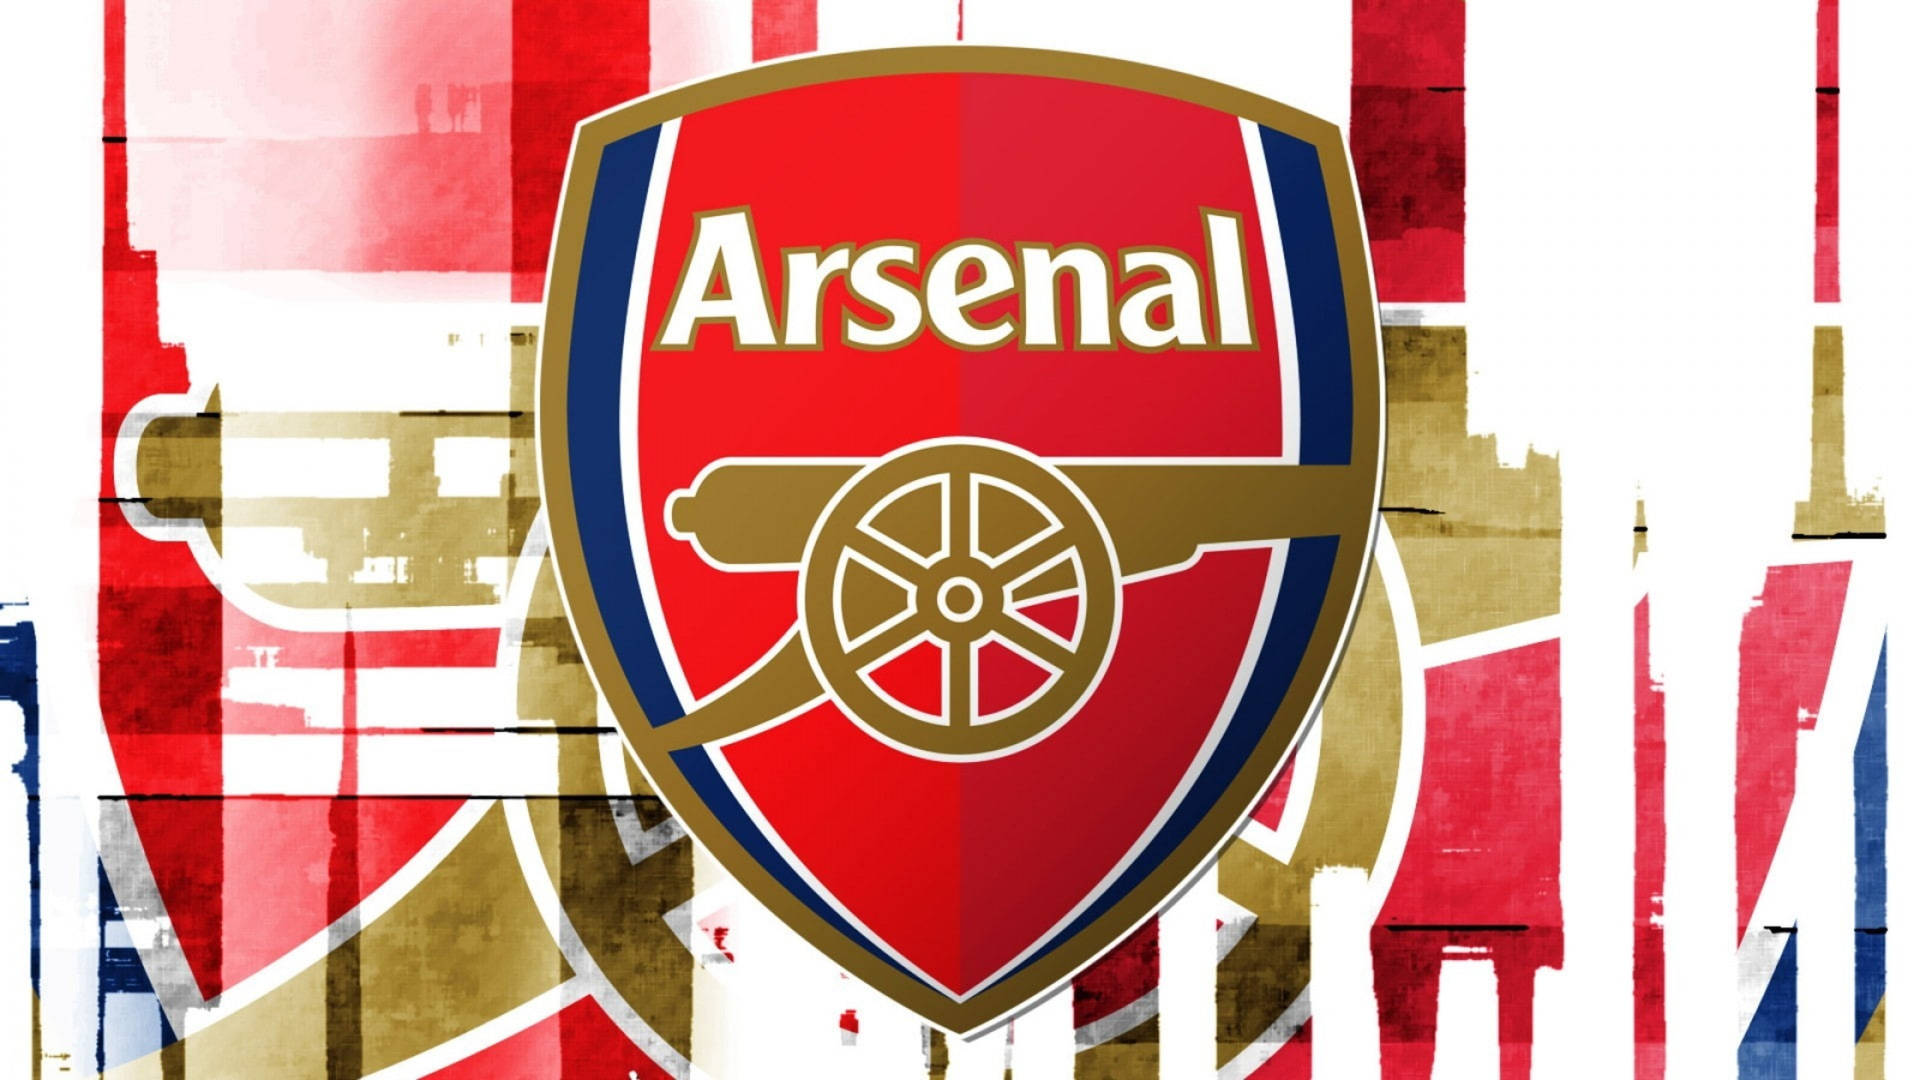 Arsenal Logo In Digital